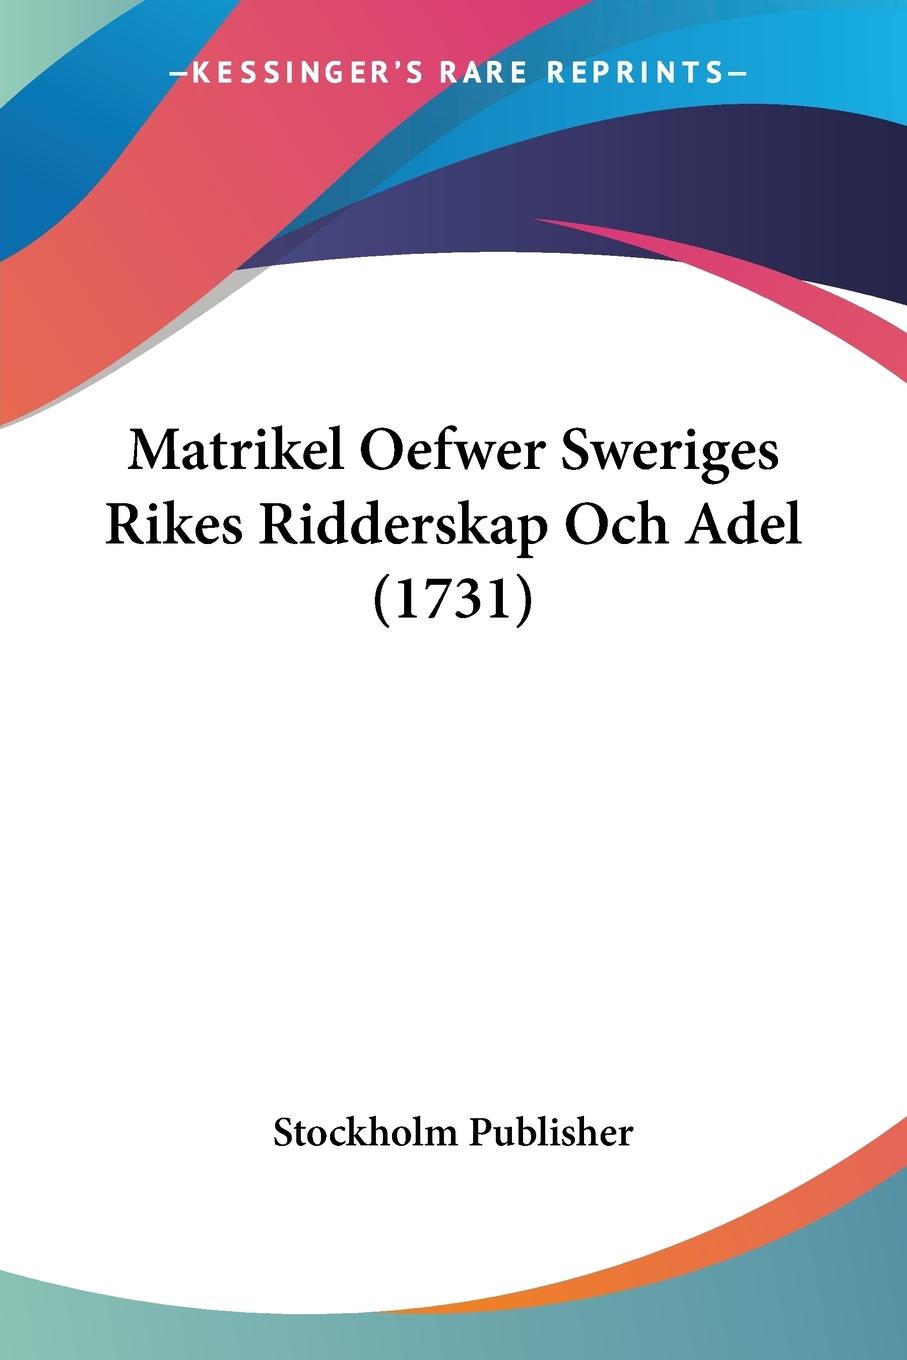 Matrikel Oefwer Sweriges Rikes Ridderskap Och Adel (1731) - Stockholm Publisher